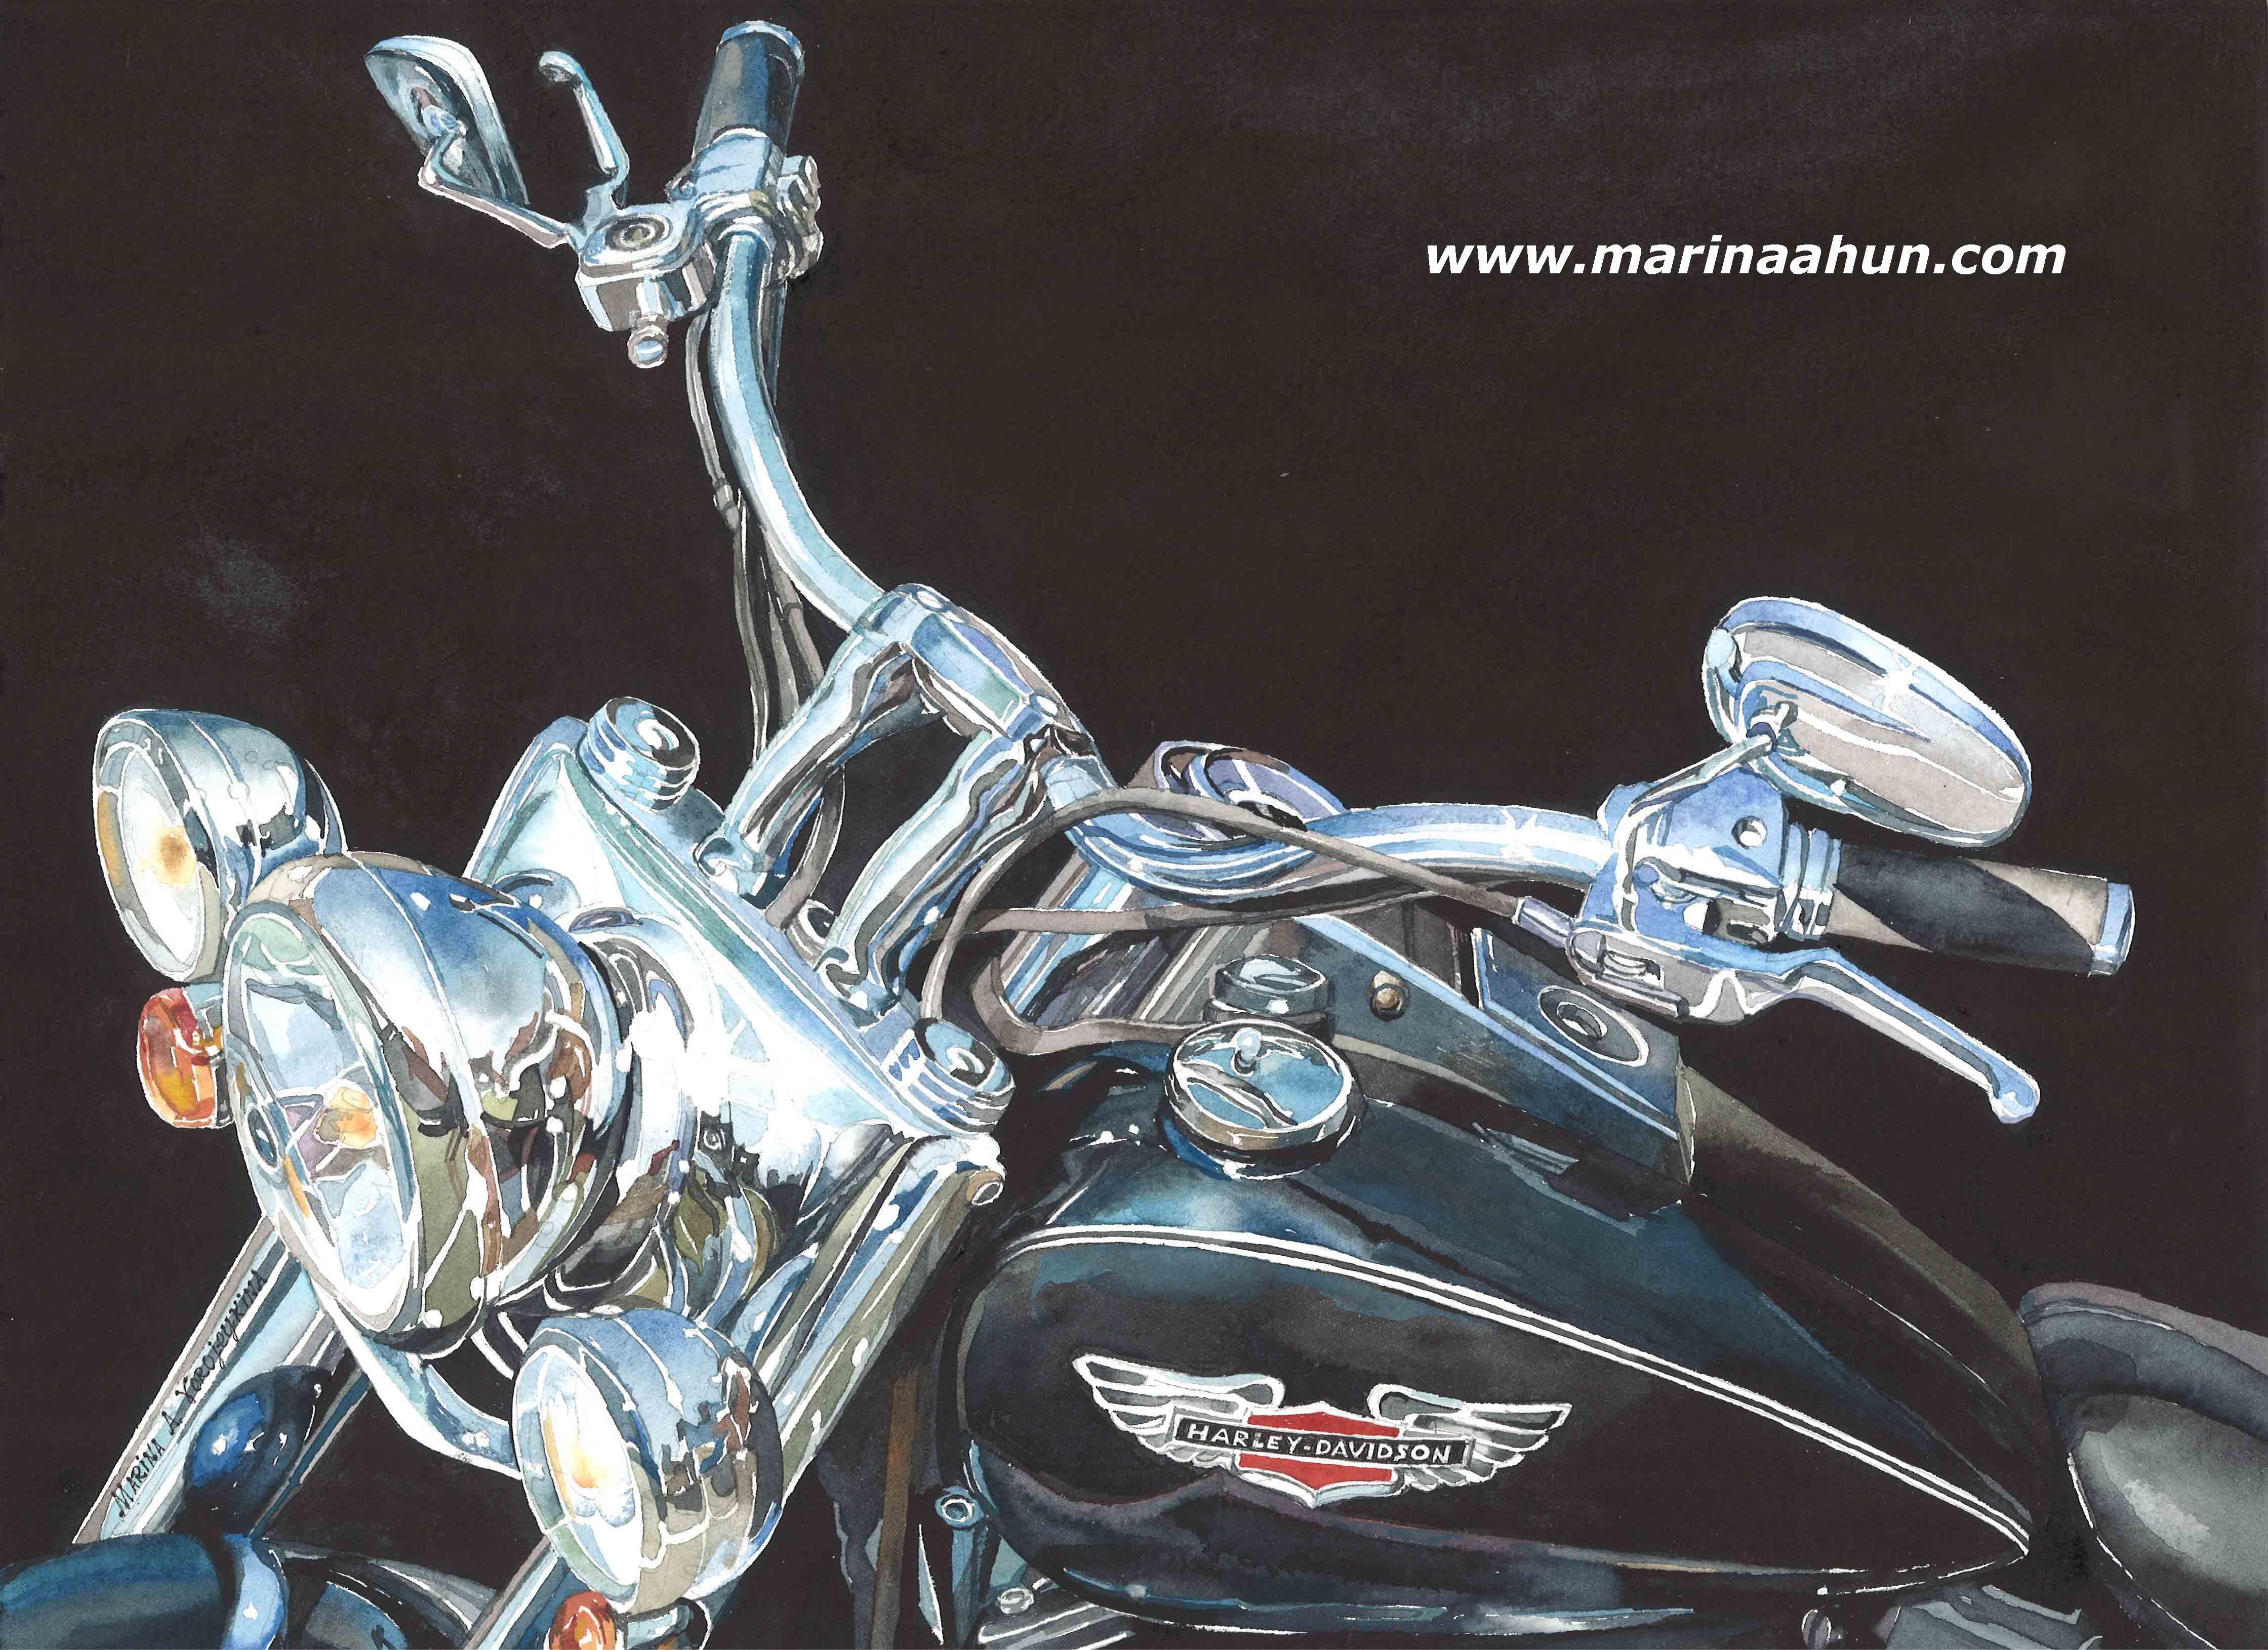 Marina Ahun Vorojeykina Artwork 'Control Tower' | Motorcycle Artwork ...